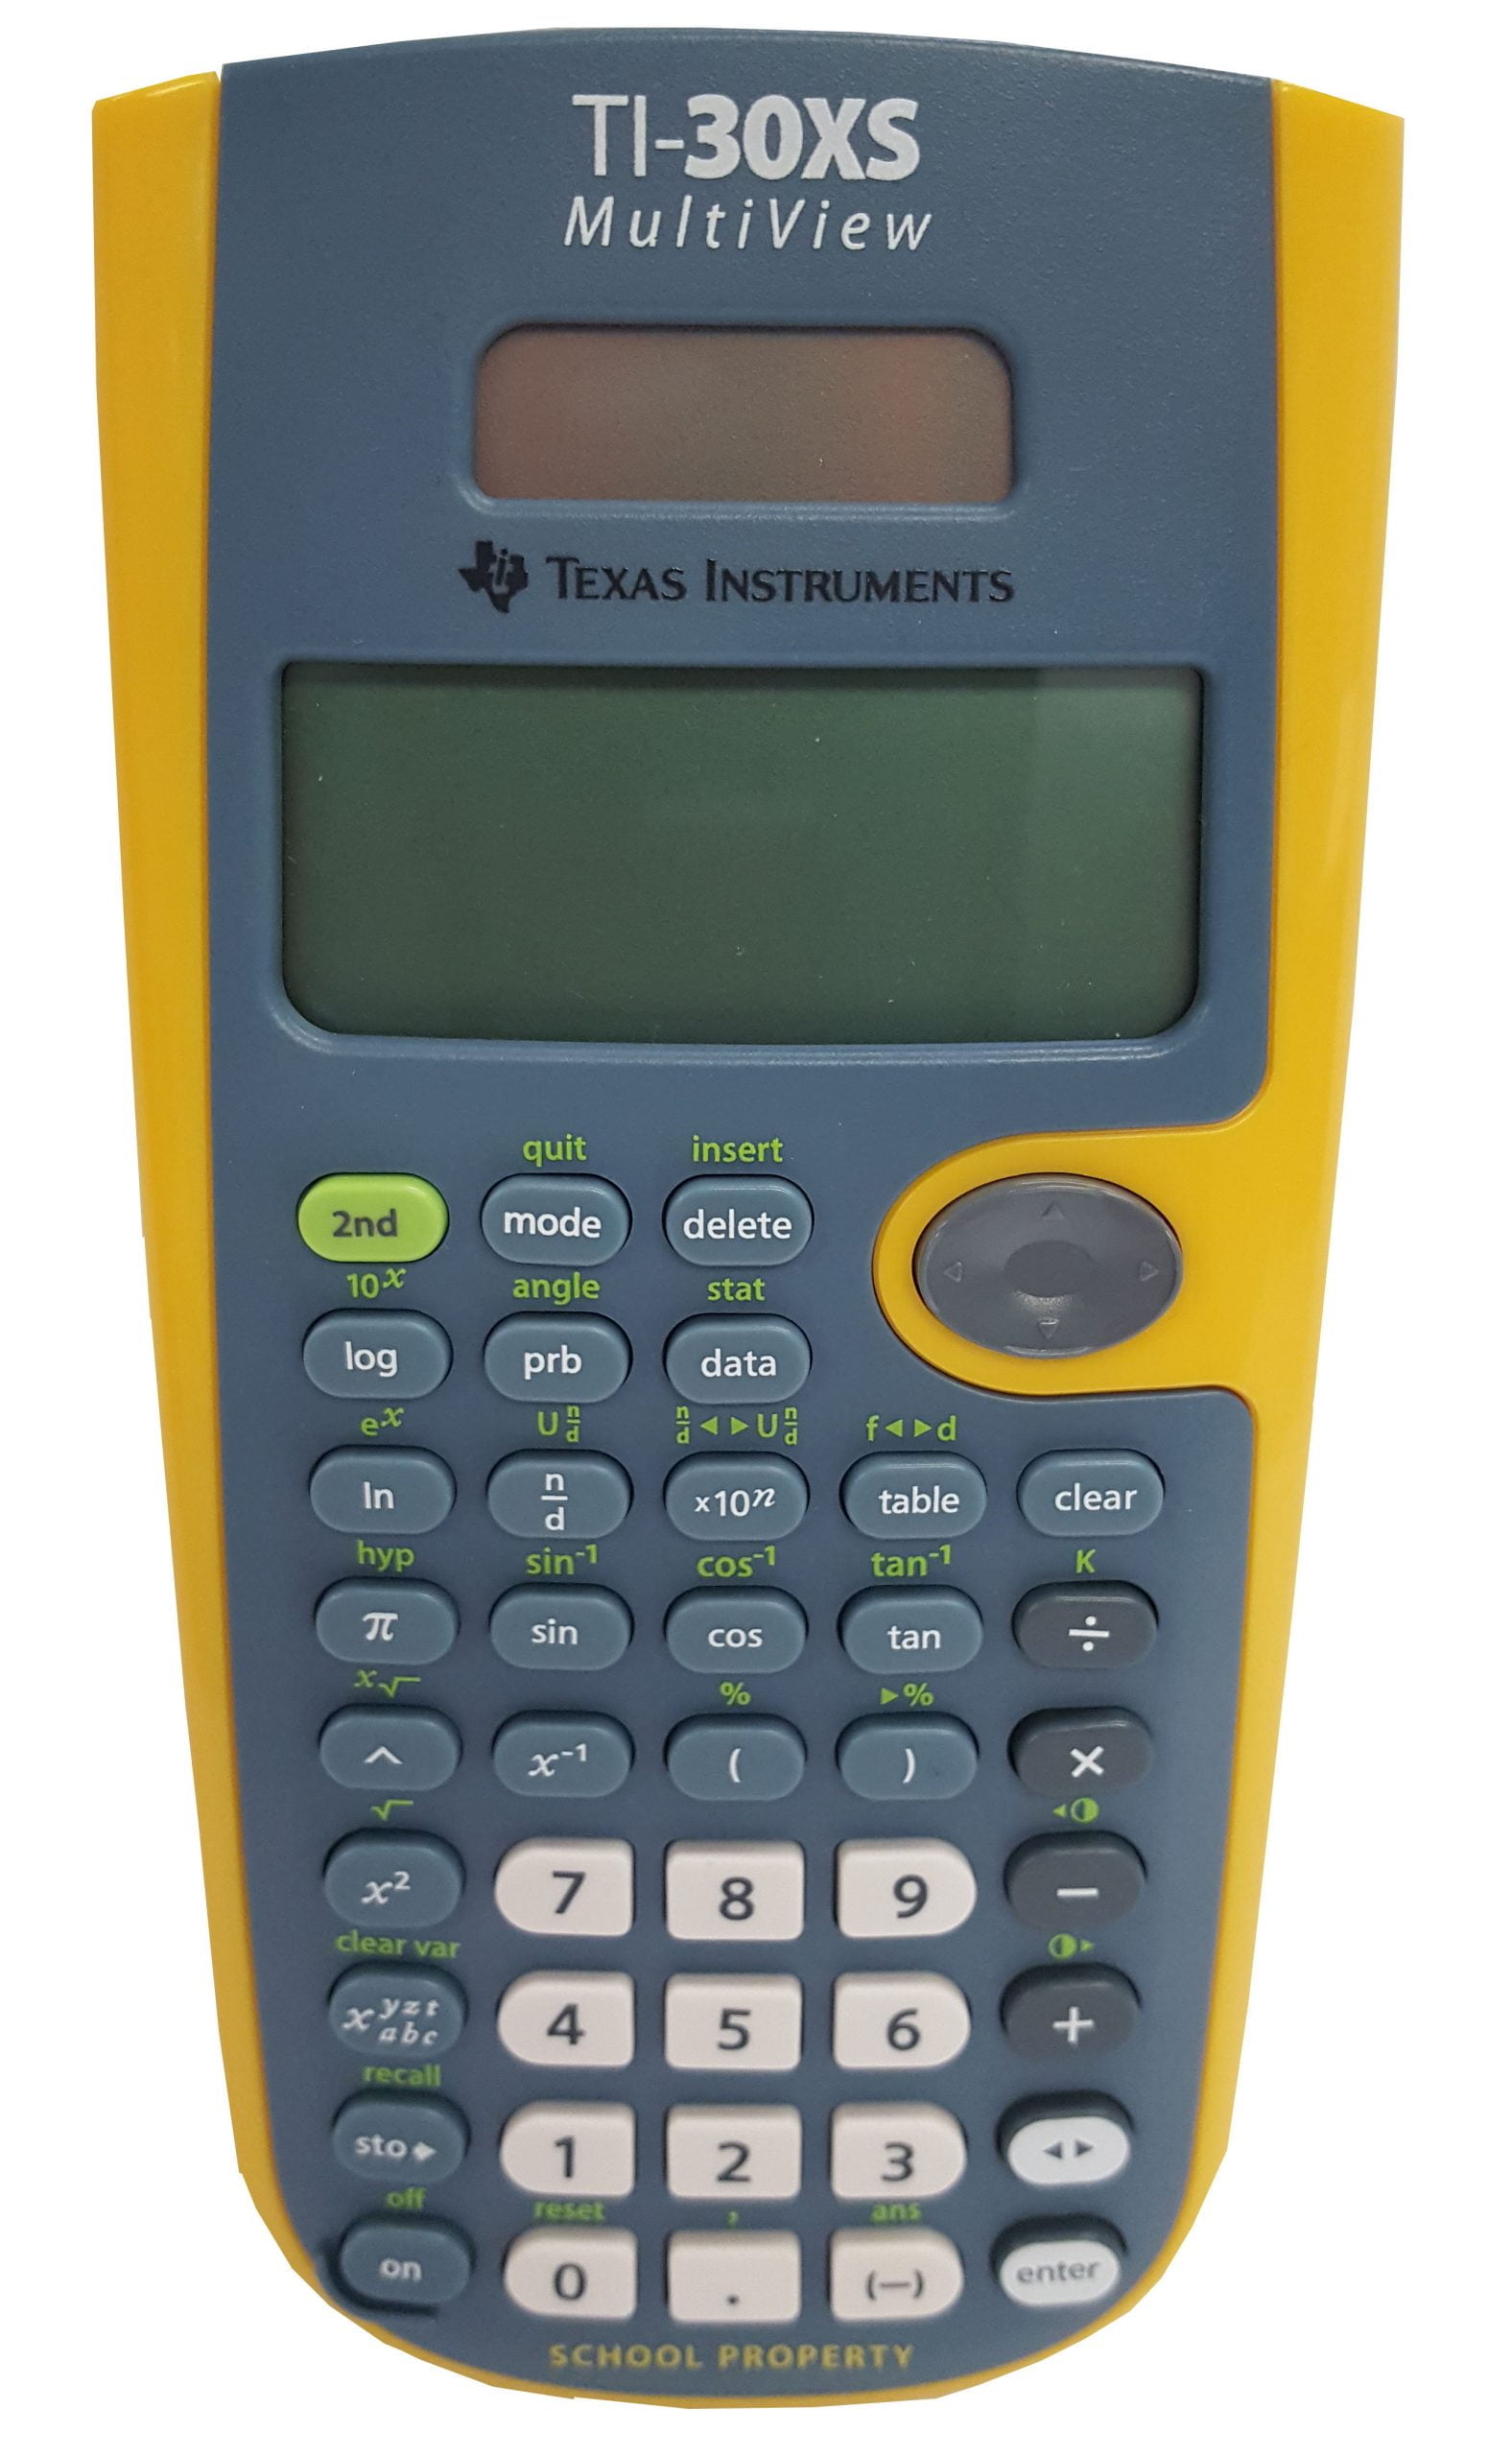 Texas Instruments TI-30XB Multiview calculatrice scientifique  Texas-Instruments